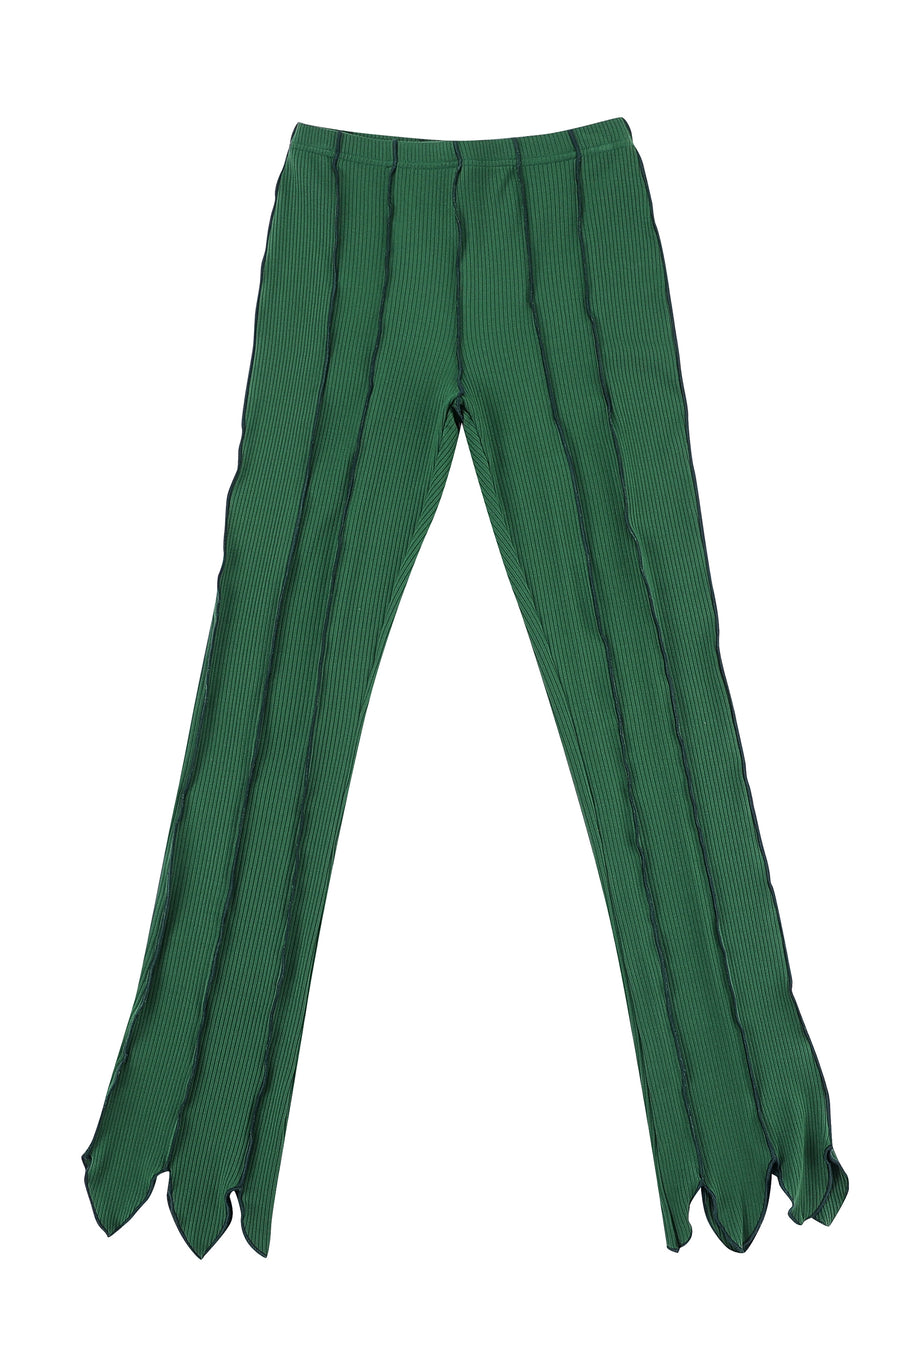 Green Leaf Tencel Rib Pants